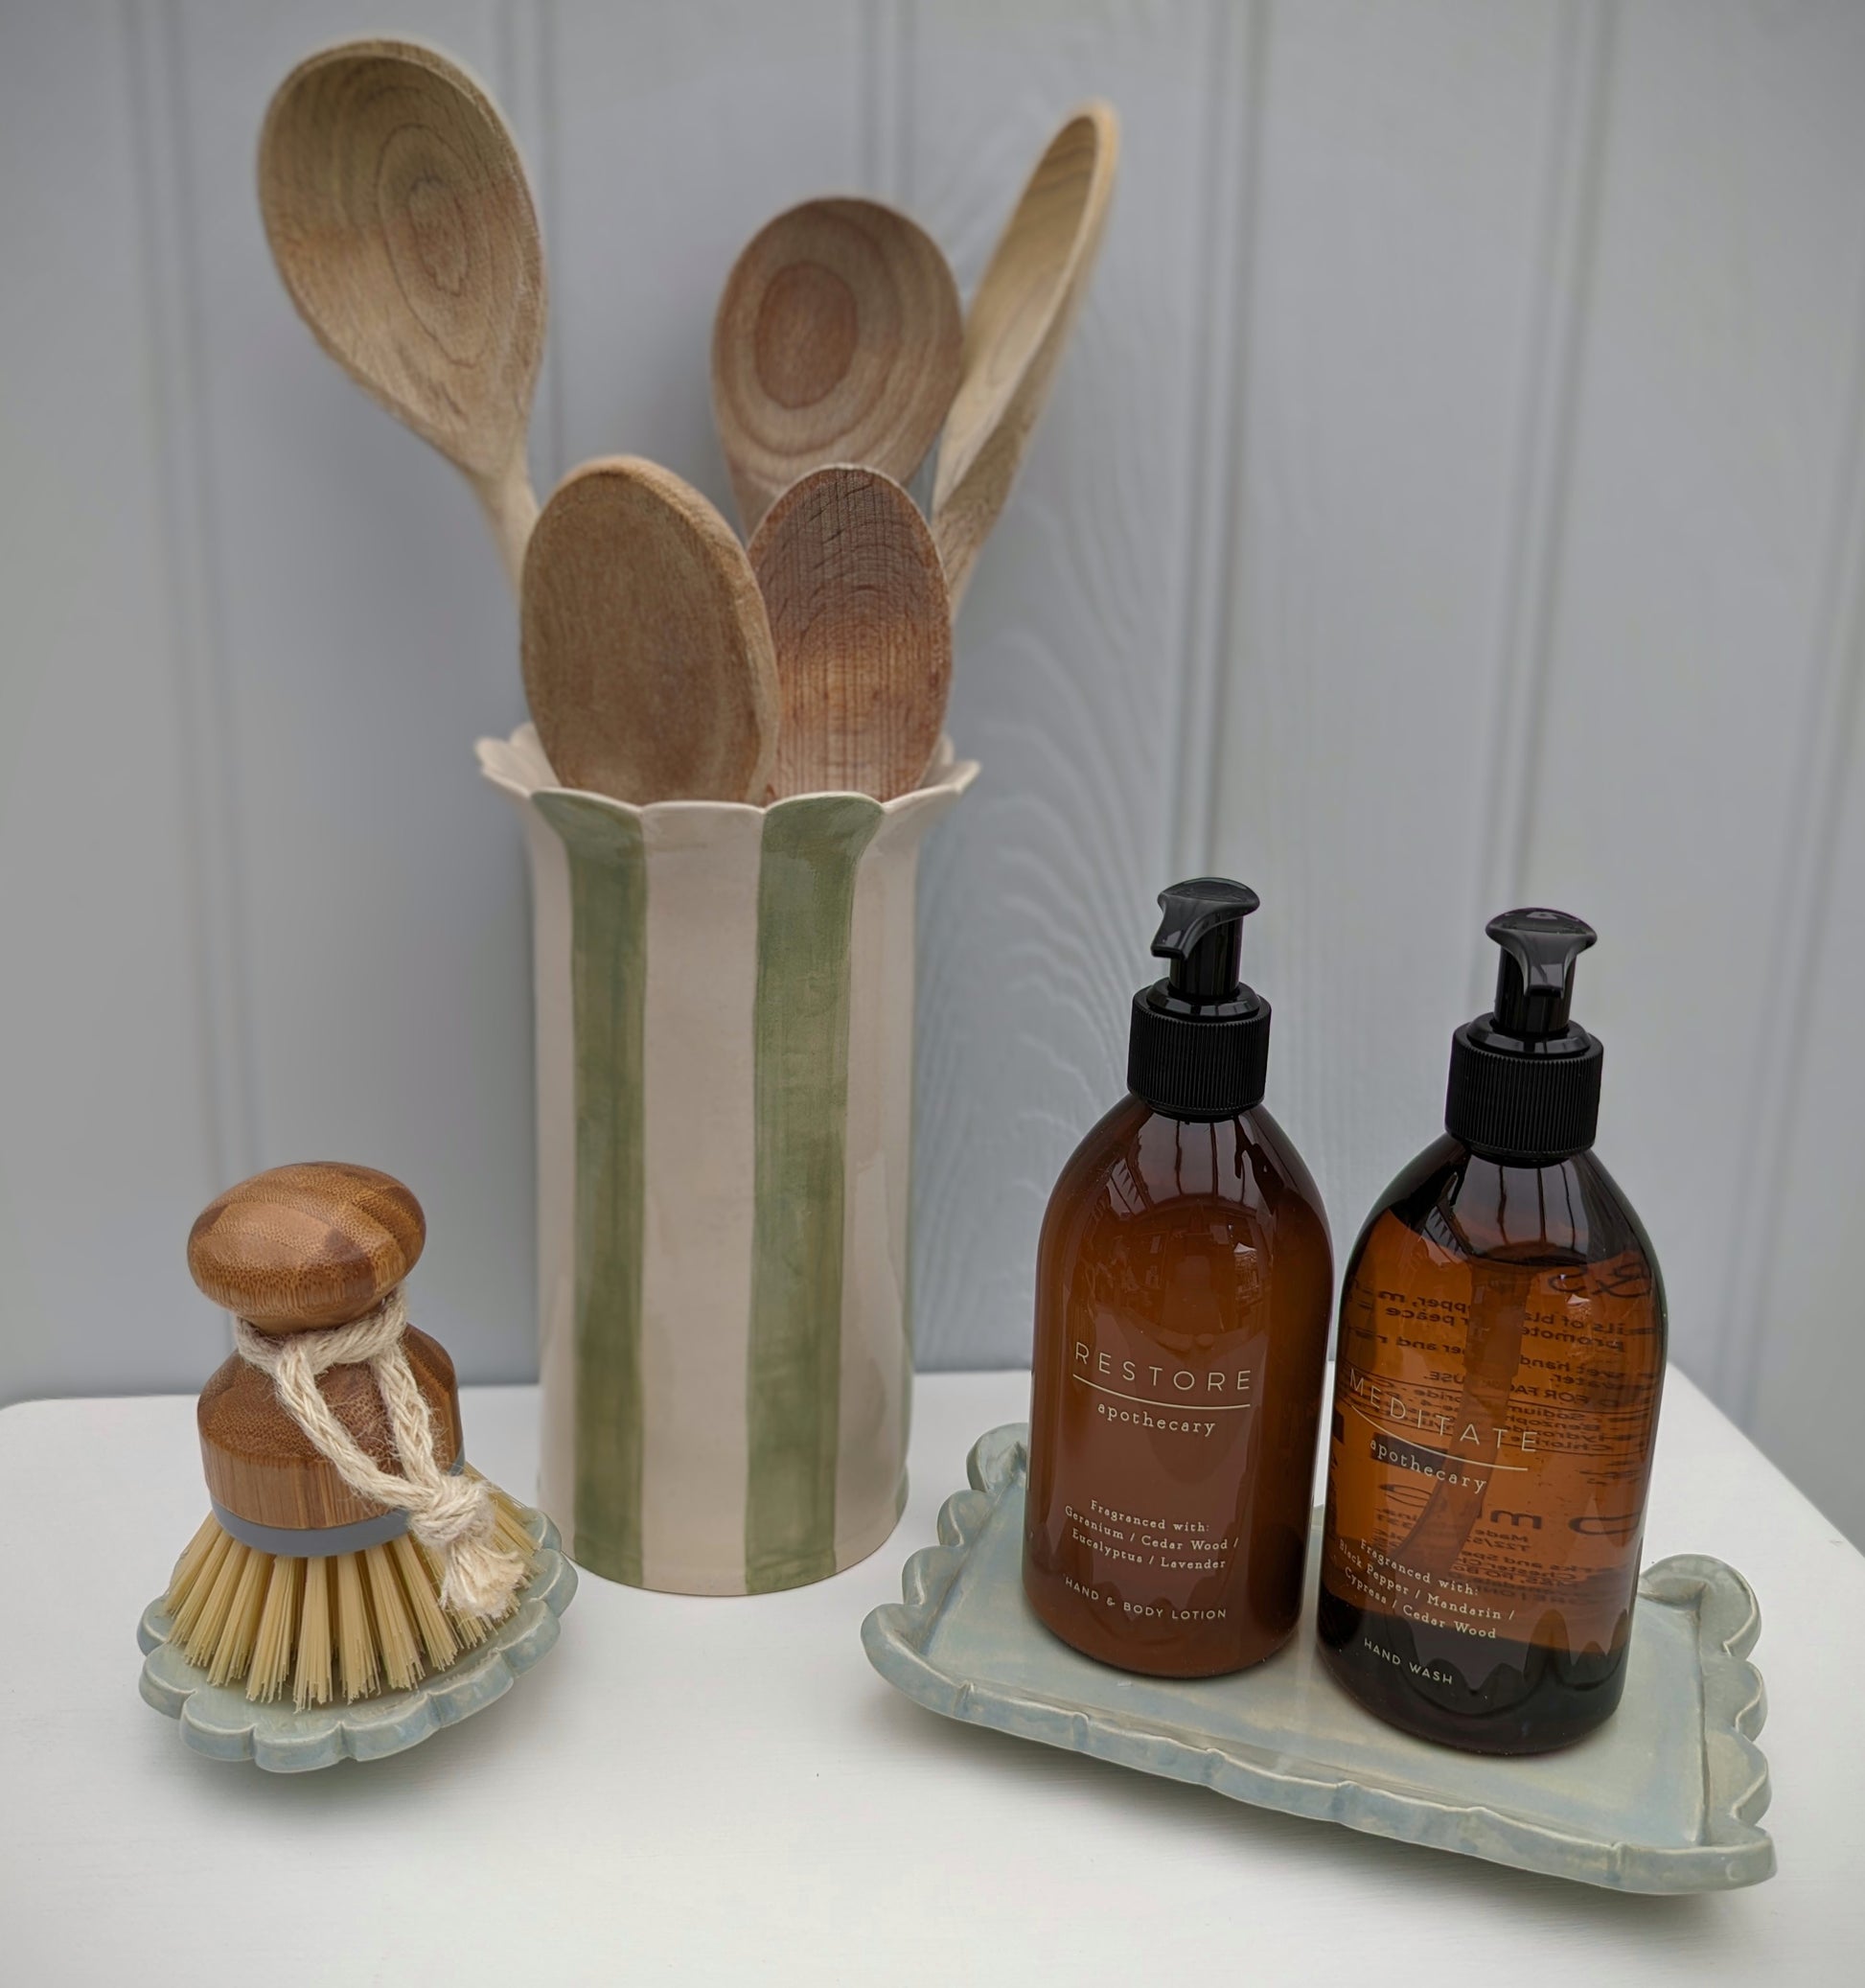 Sage kitchen utensil holder with matching items